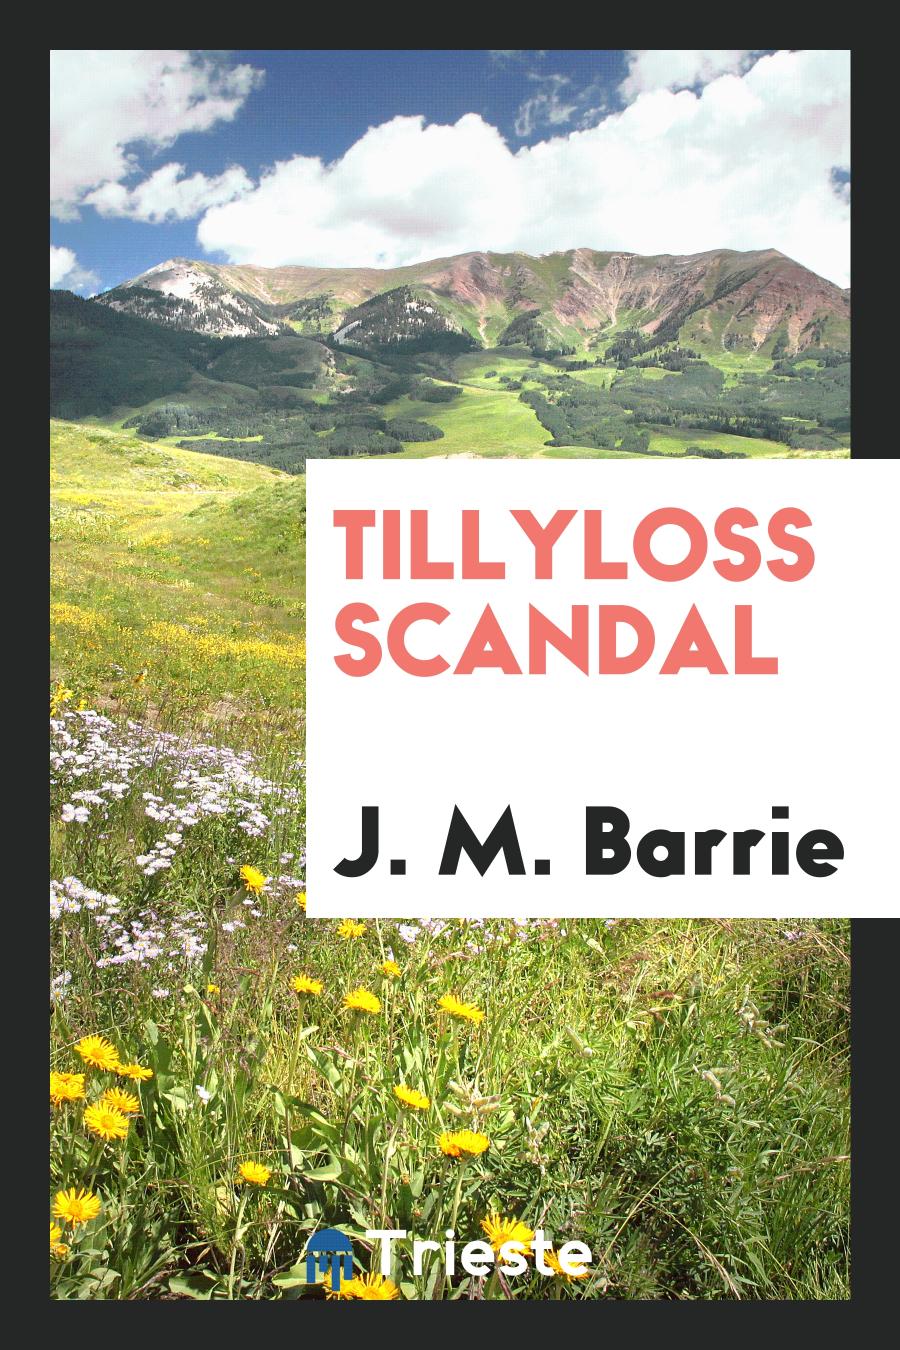 Tillyloss scandal